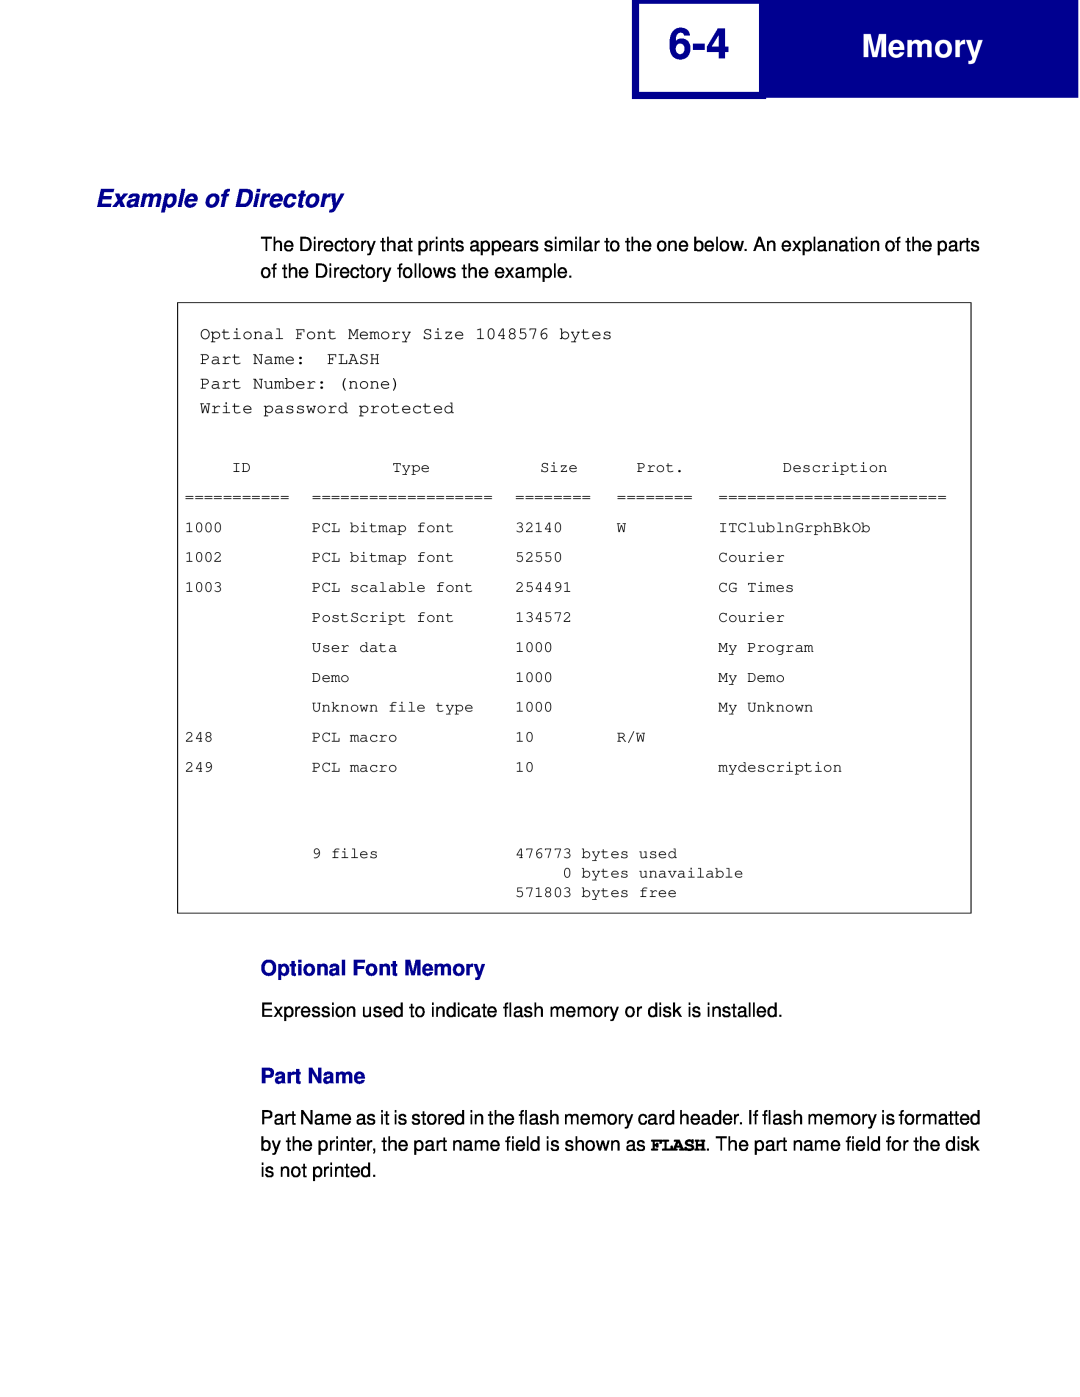 Lexmark C762, C760 manual Example of Directory, Optional Font Memory, Part Name 